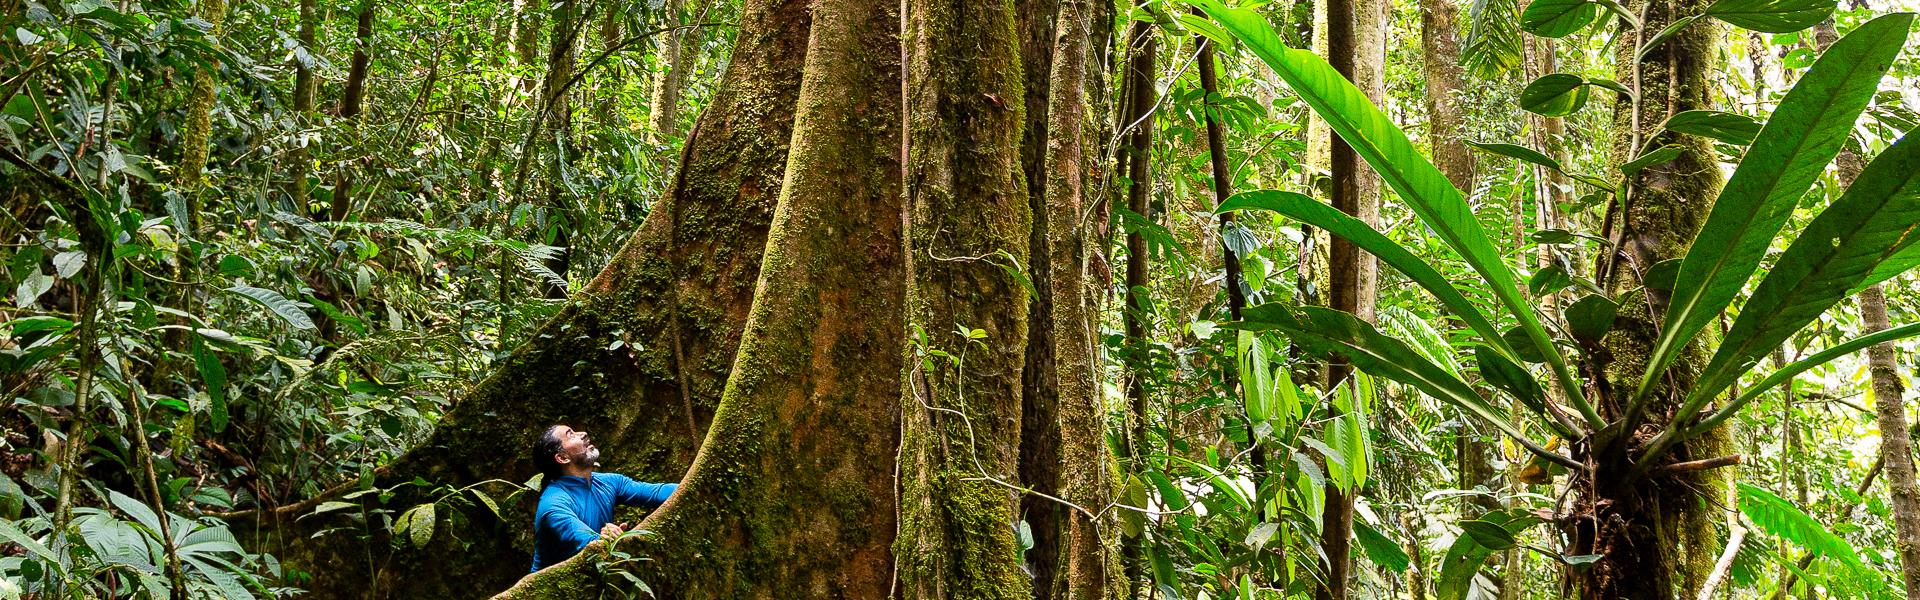 Baumriese mit Brettwurzel im Regenwald |  Alfonso Tandazo, Surtrek / Chamleon